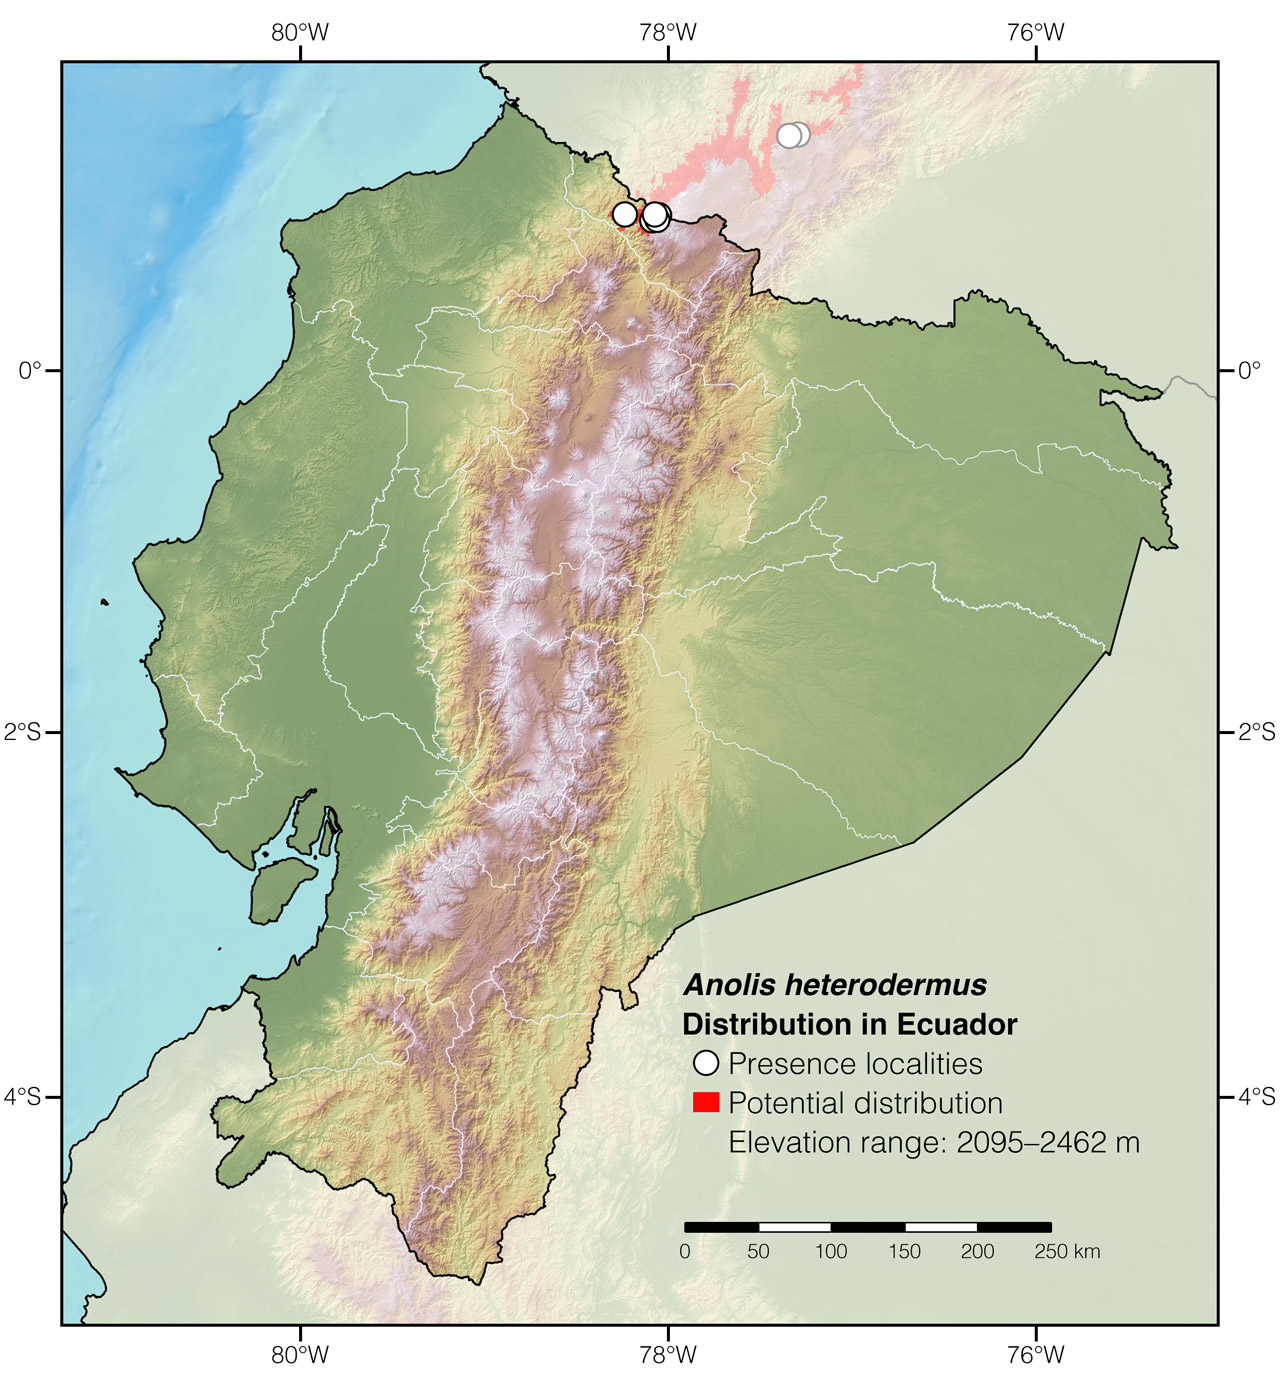 Distribution of Anolis heterodermus in Ecuador